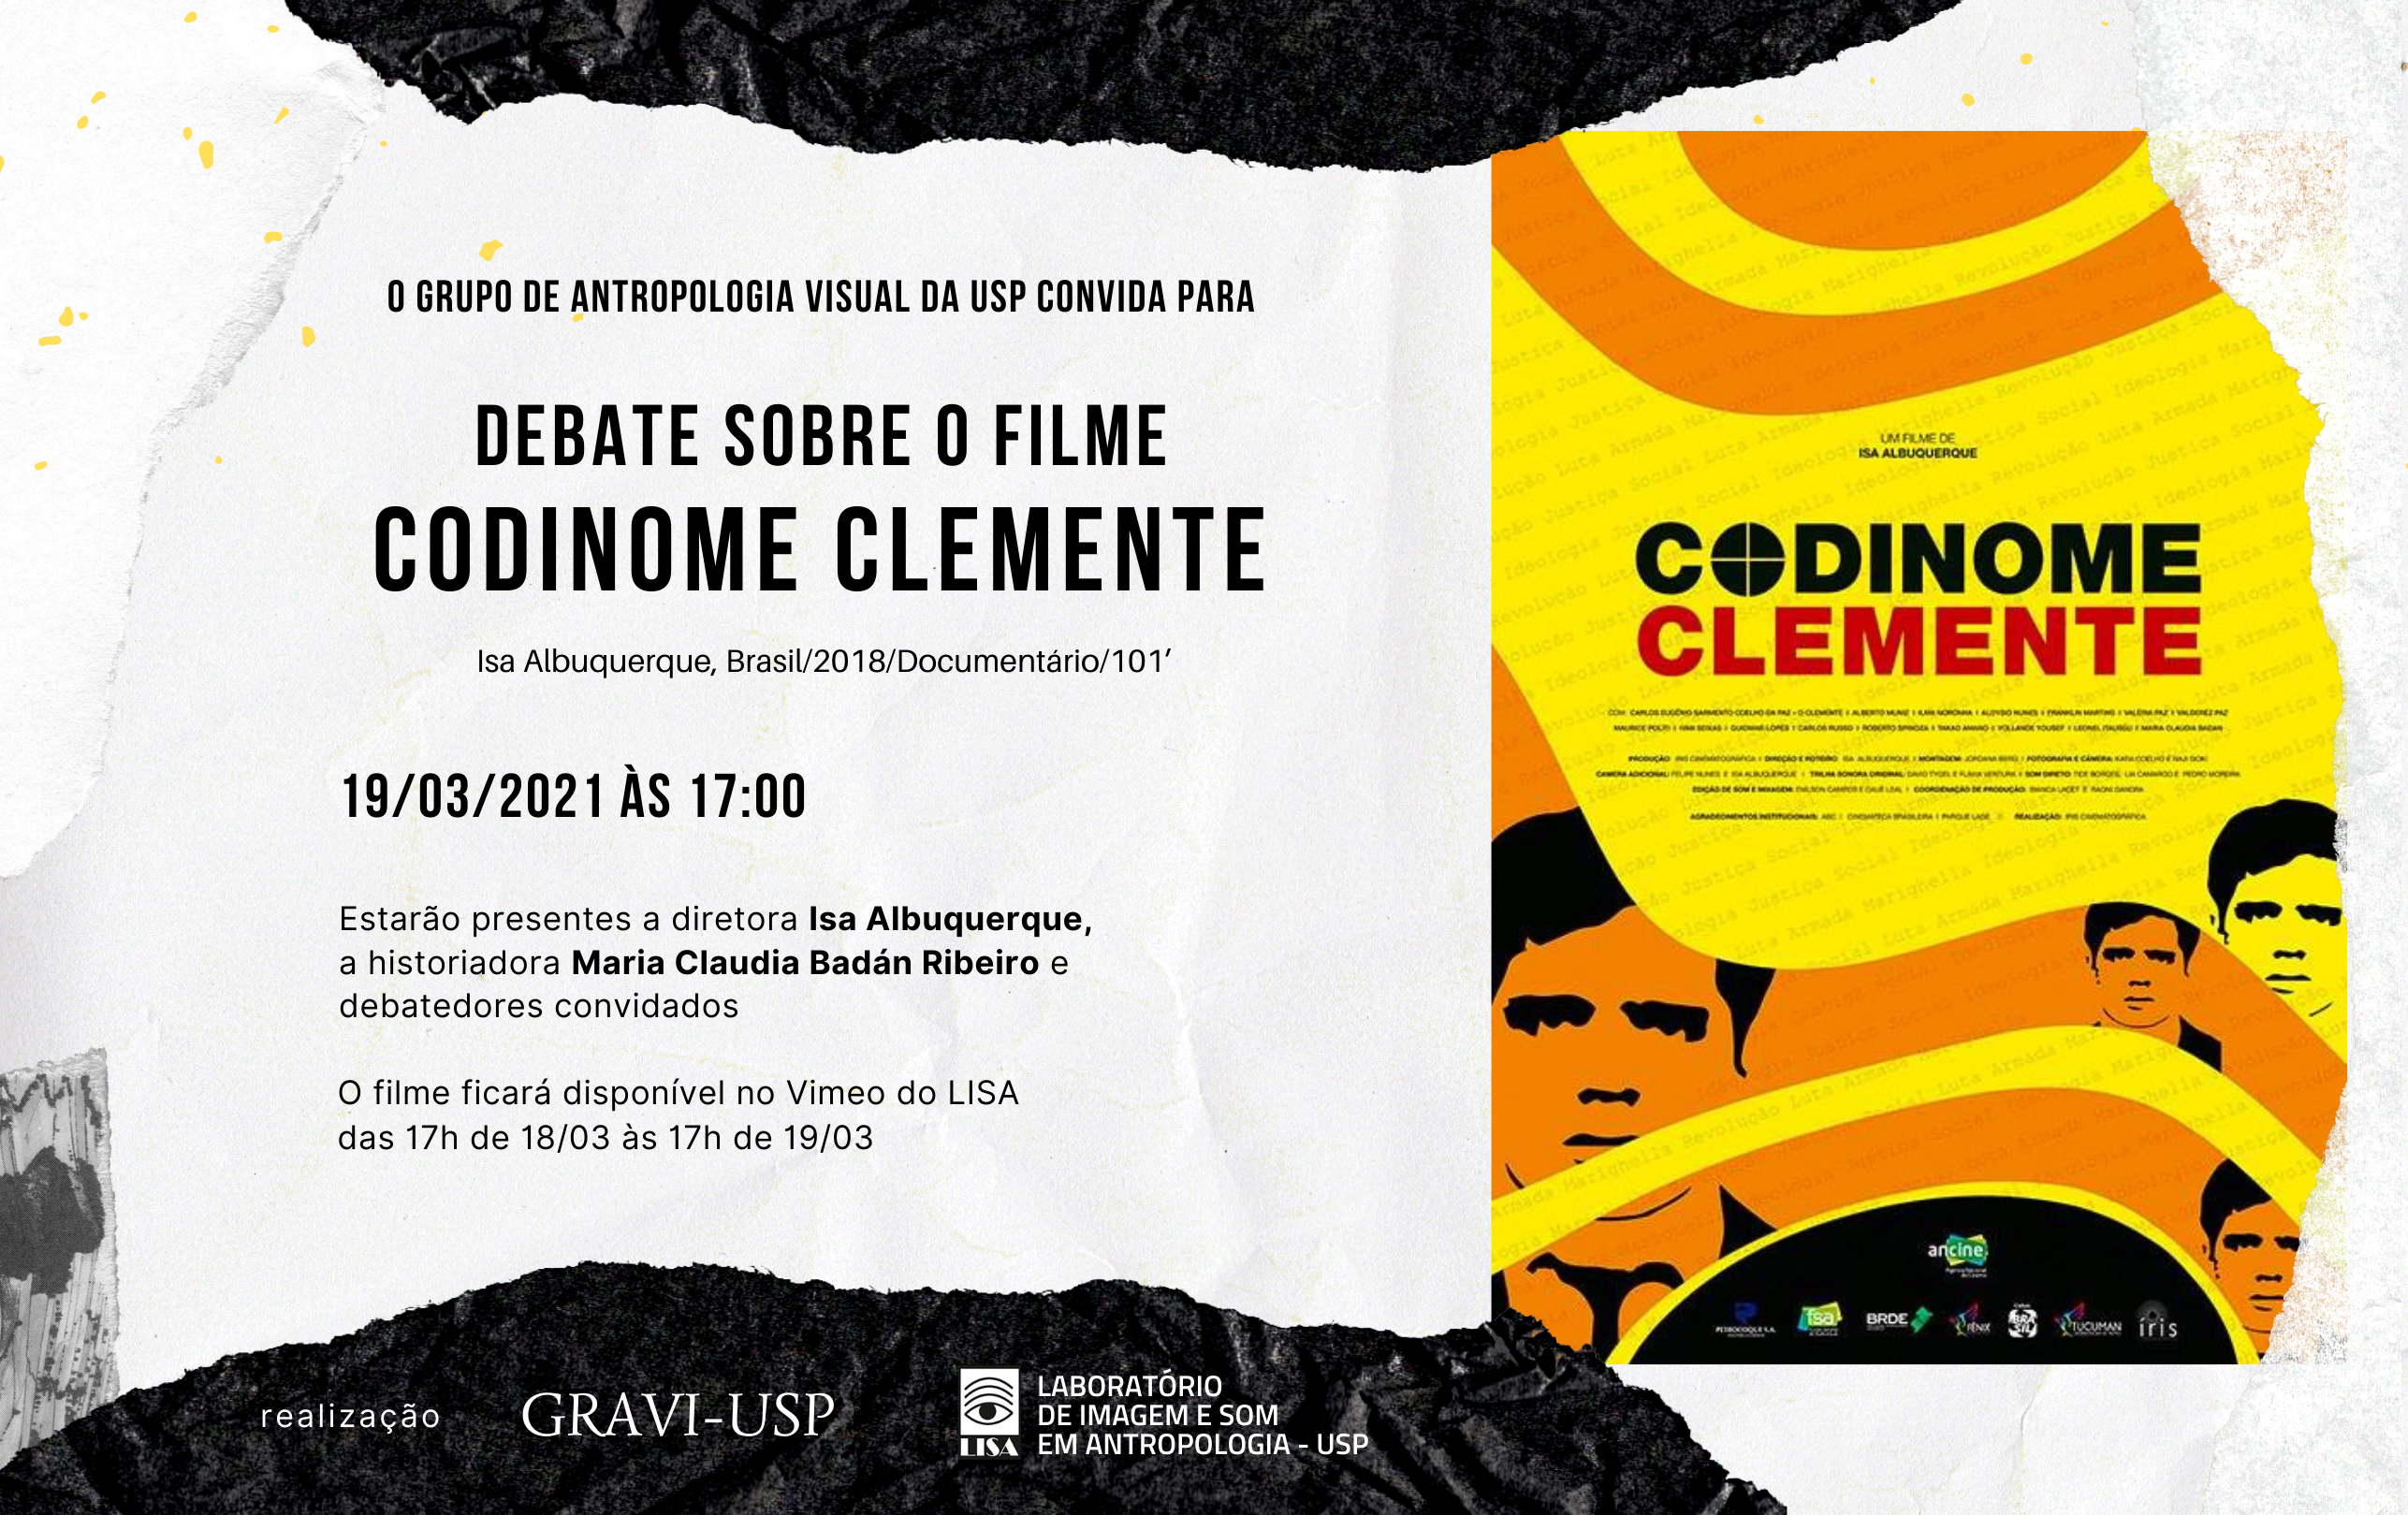 Debate of the film CODINOME CLEMENTE (Brazil / 2018 / Documentary / 101 ’)